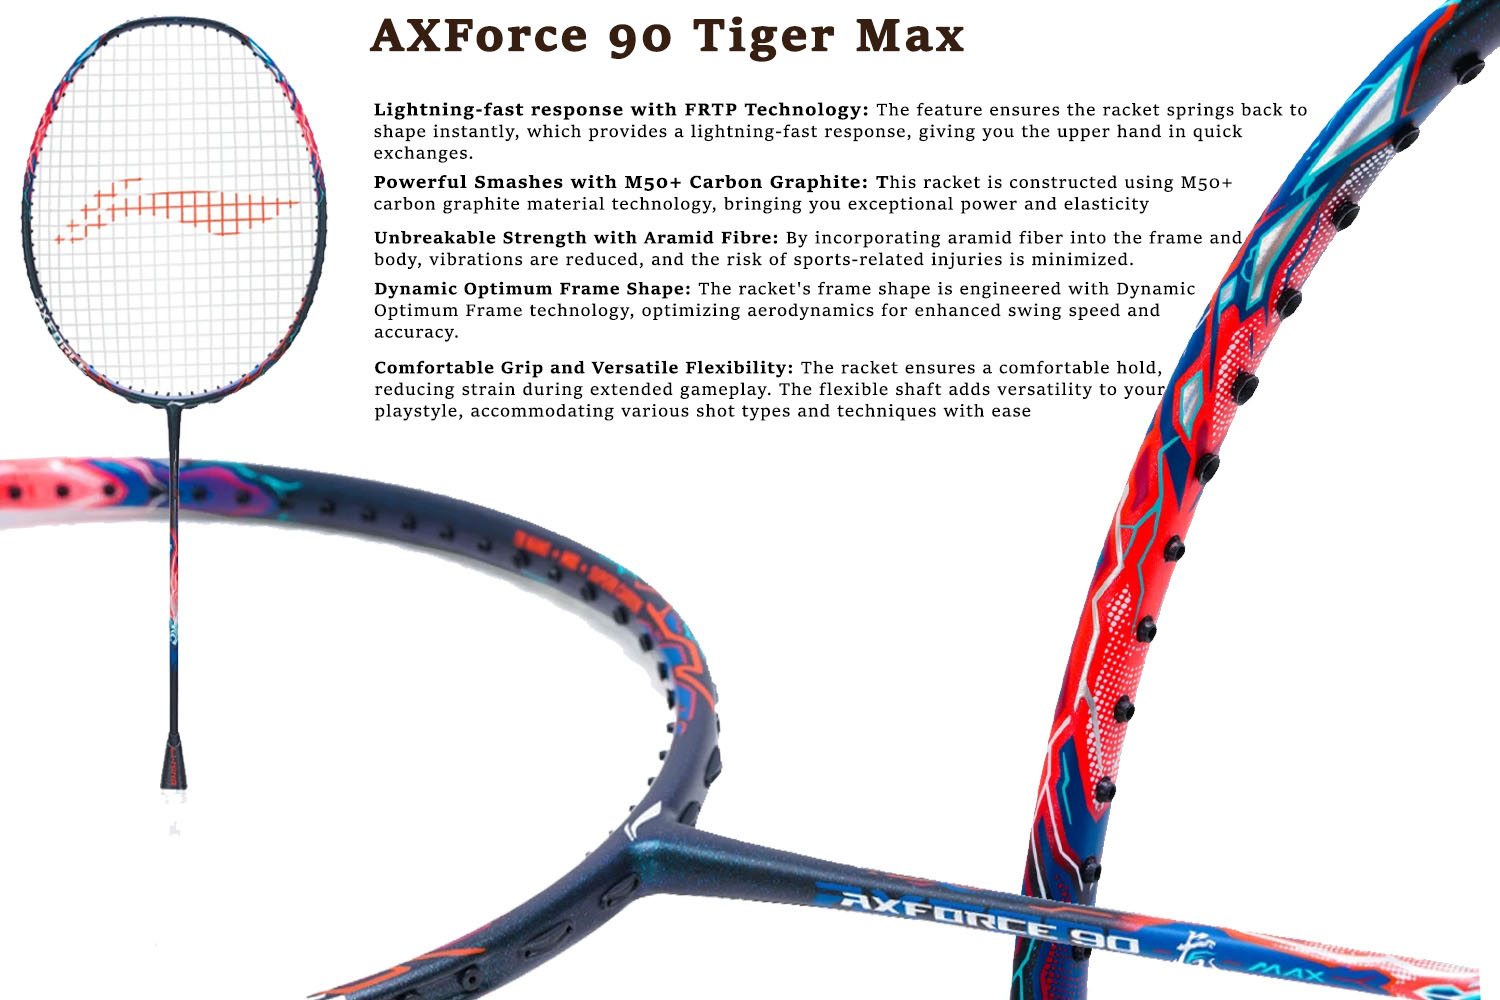 LI ning Axforce 90 tiger max badminton racket details